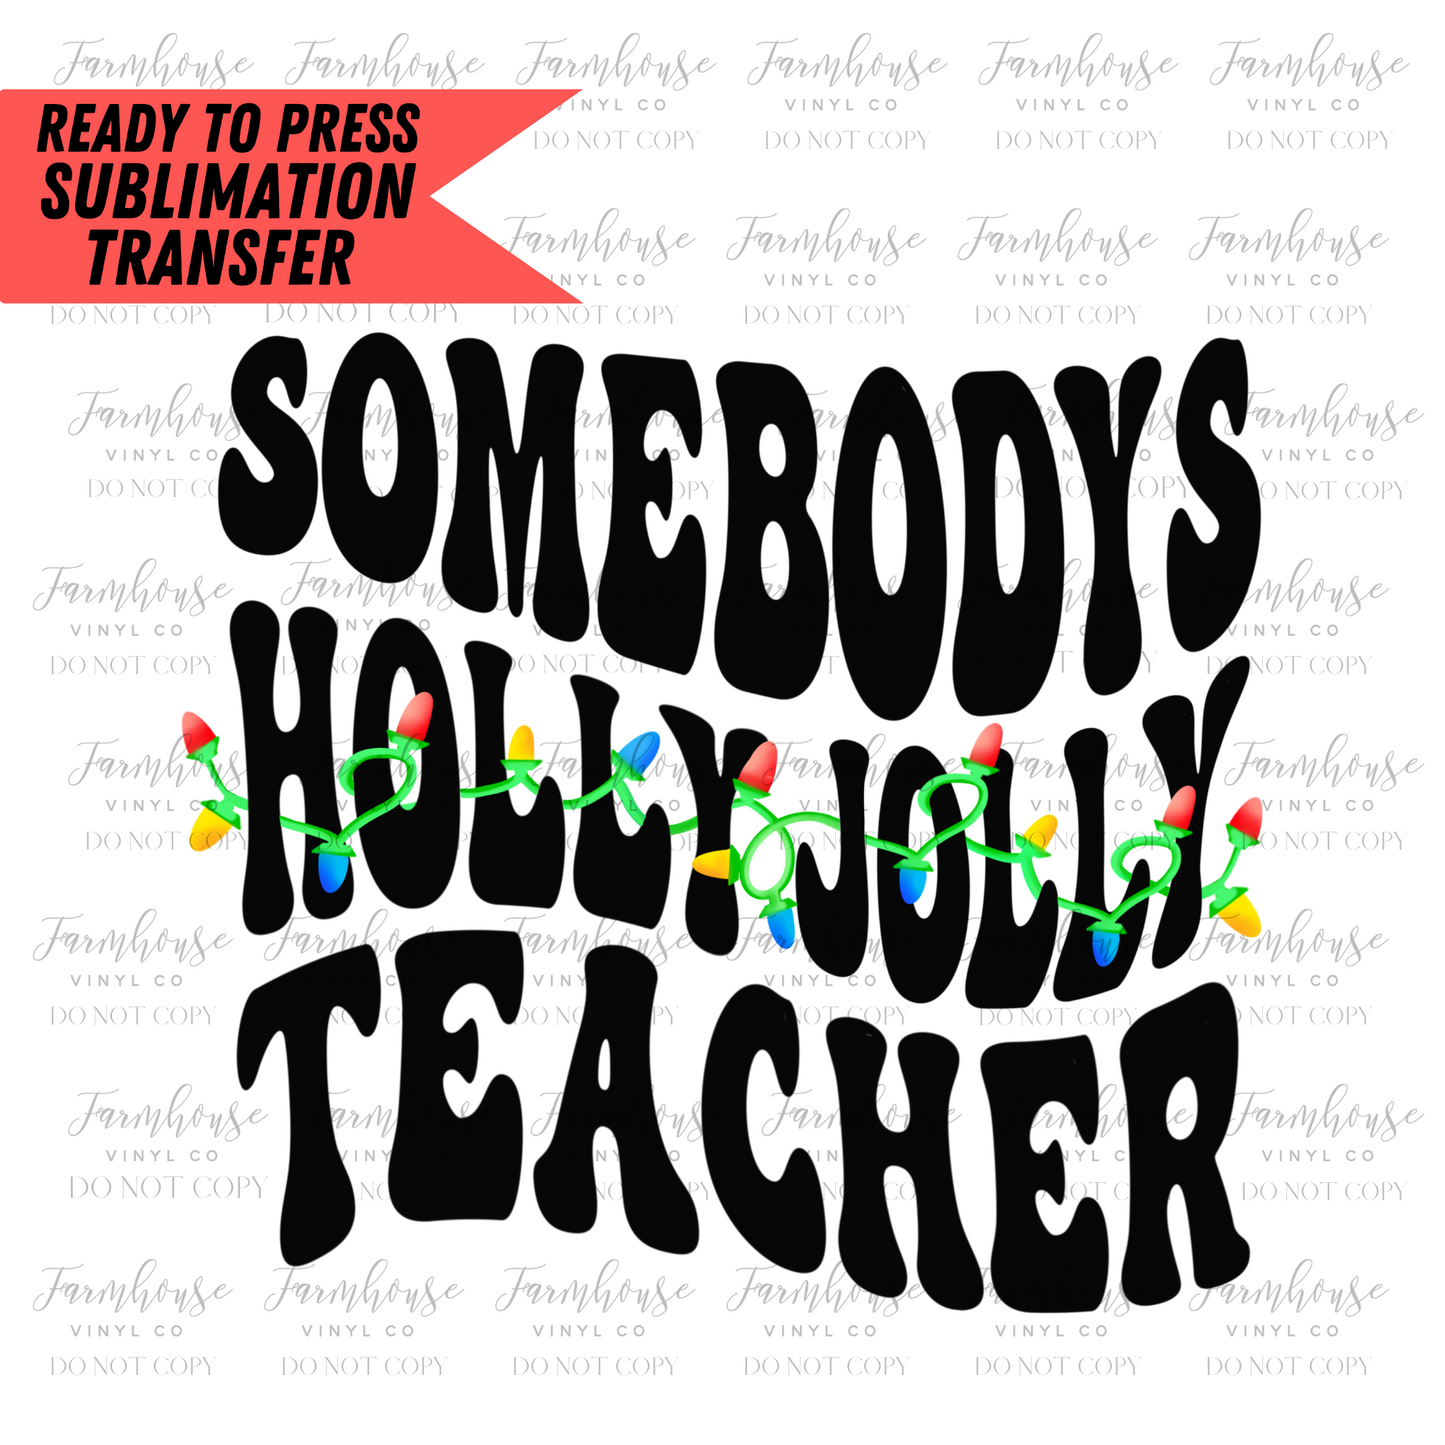 Somebodys Holly Jolly Teacher Ready To Press Sublimation Transfer